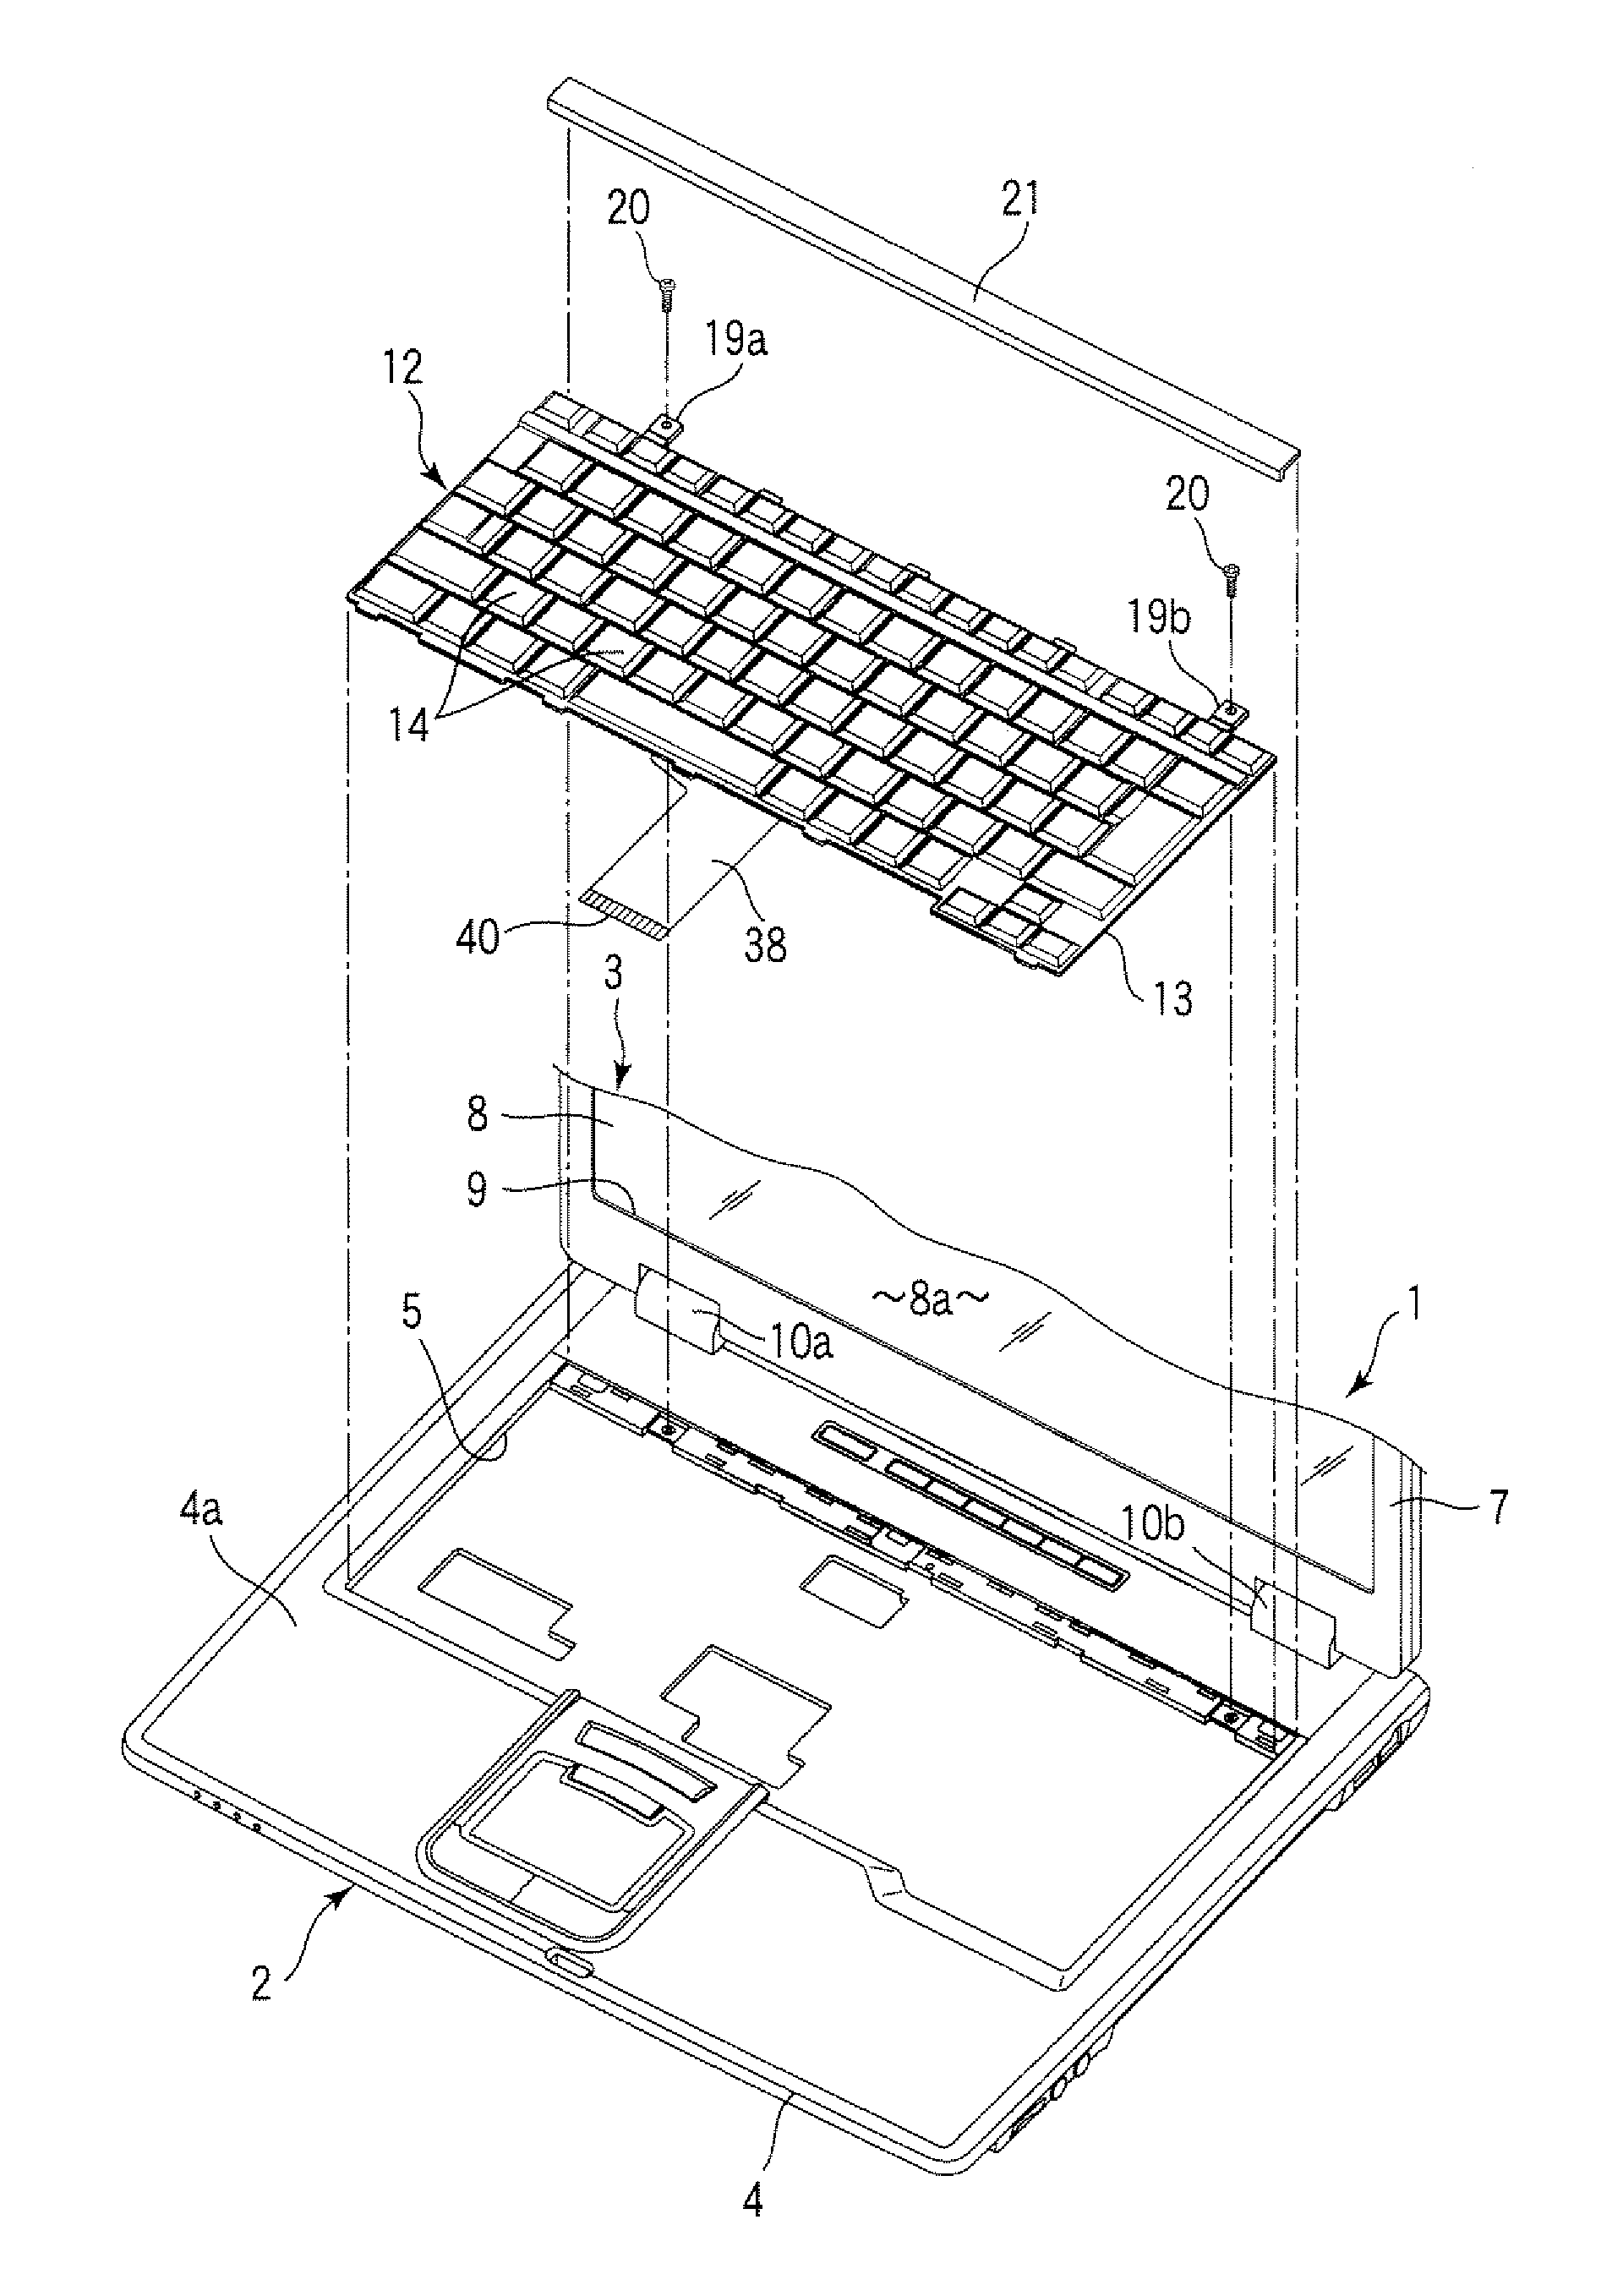 Keyboard, Lighting Module for Keyboard and Electronic Apparatus